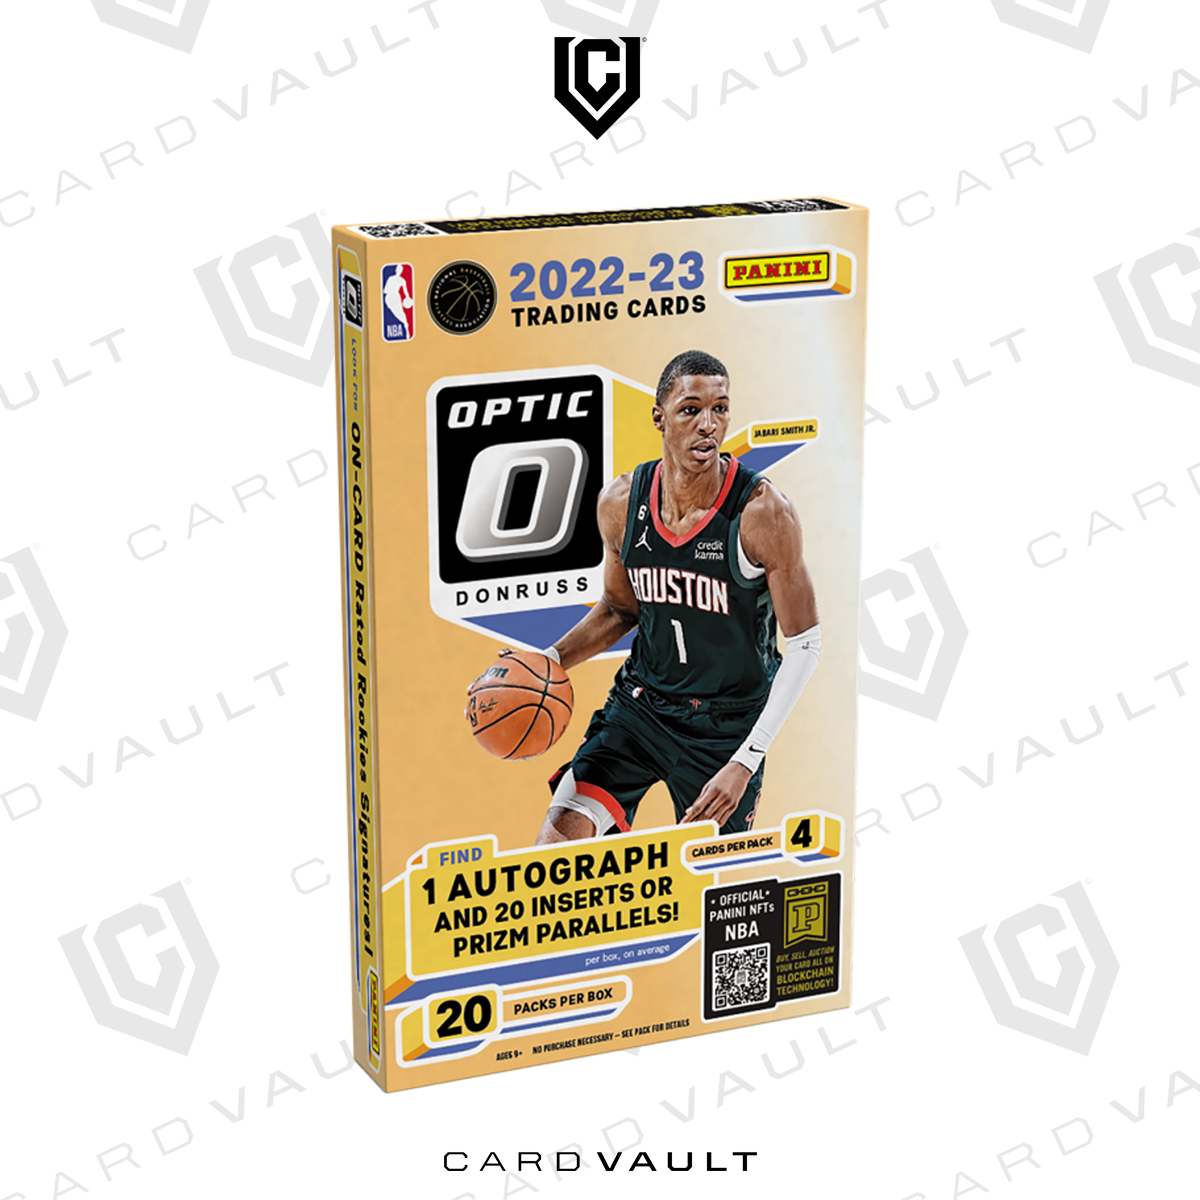 The Card Vault: The Ultimate Sports Card Experience – CardVault